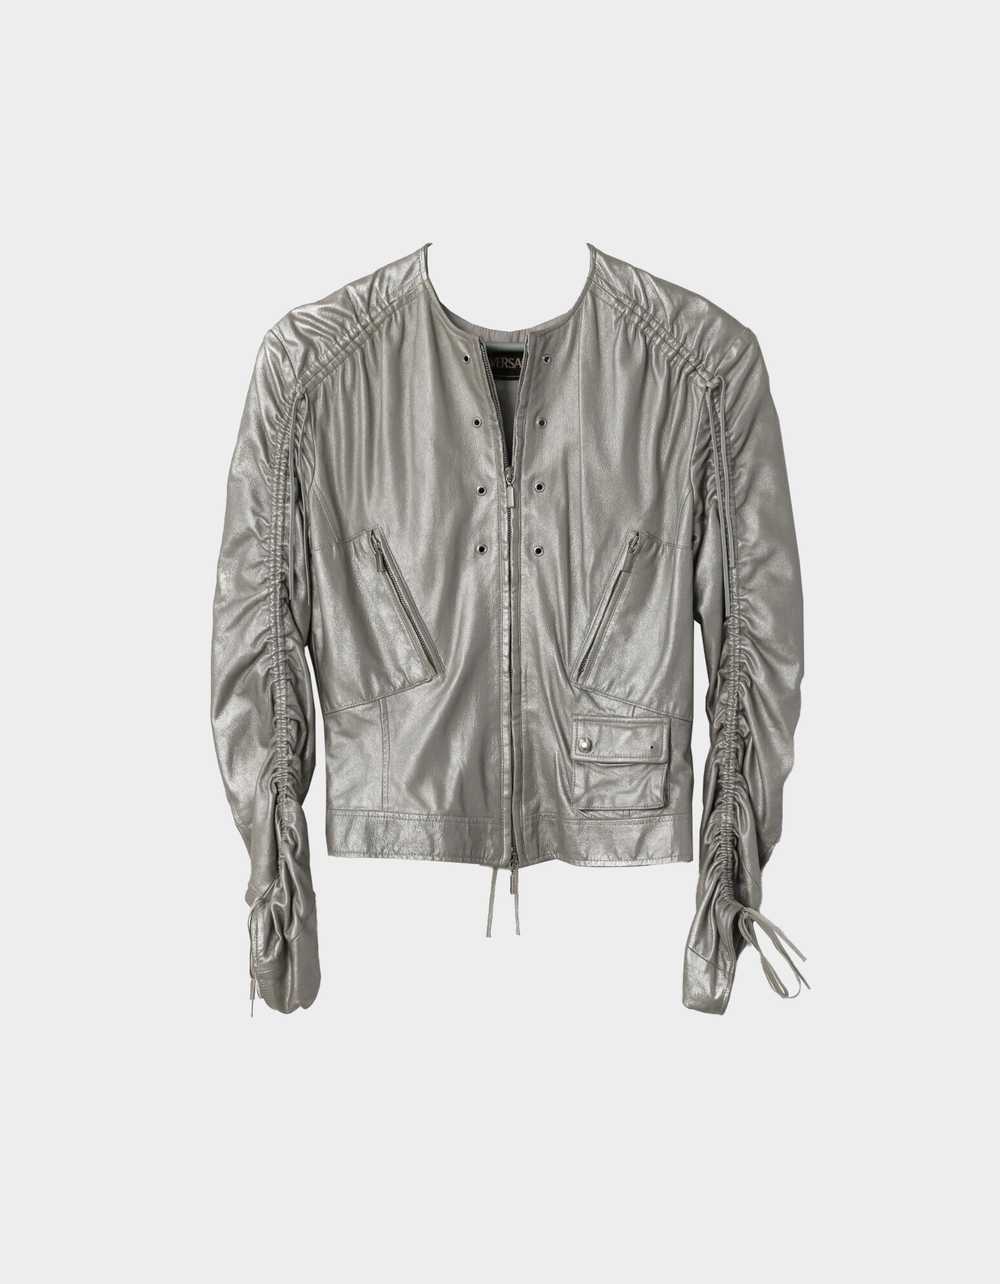 Versace 2000s Silver Lace Up Biker Jacket - image 1